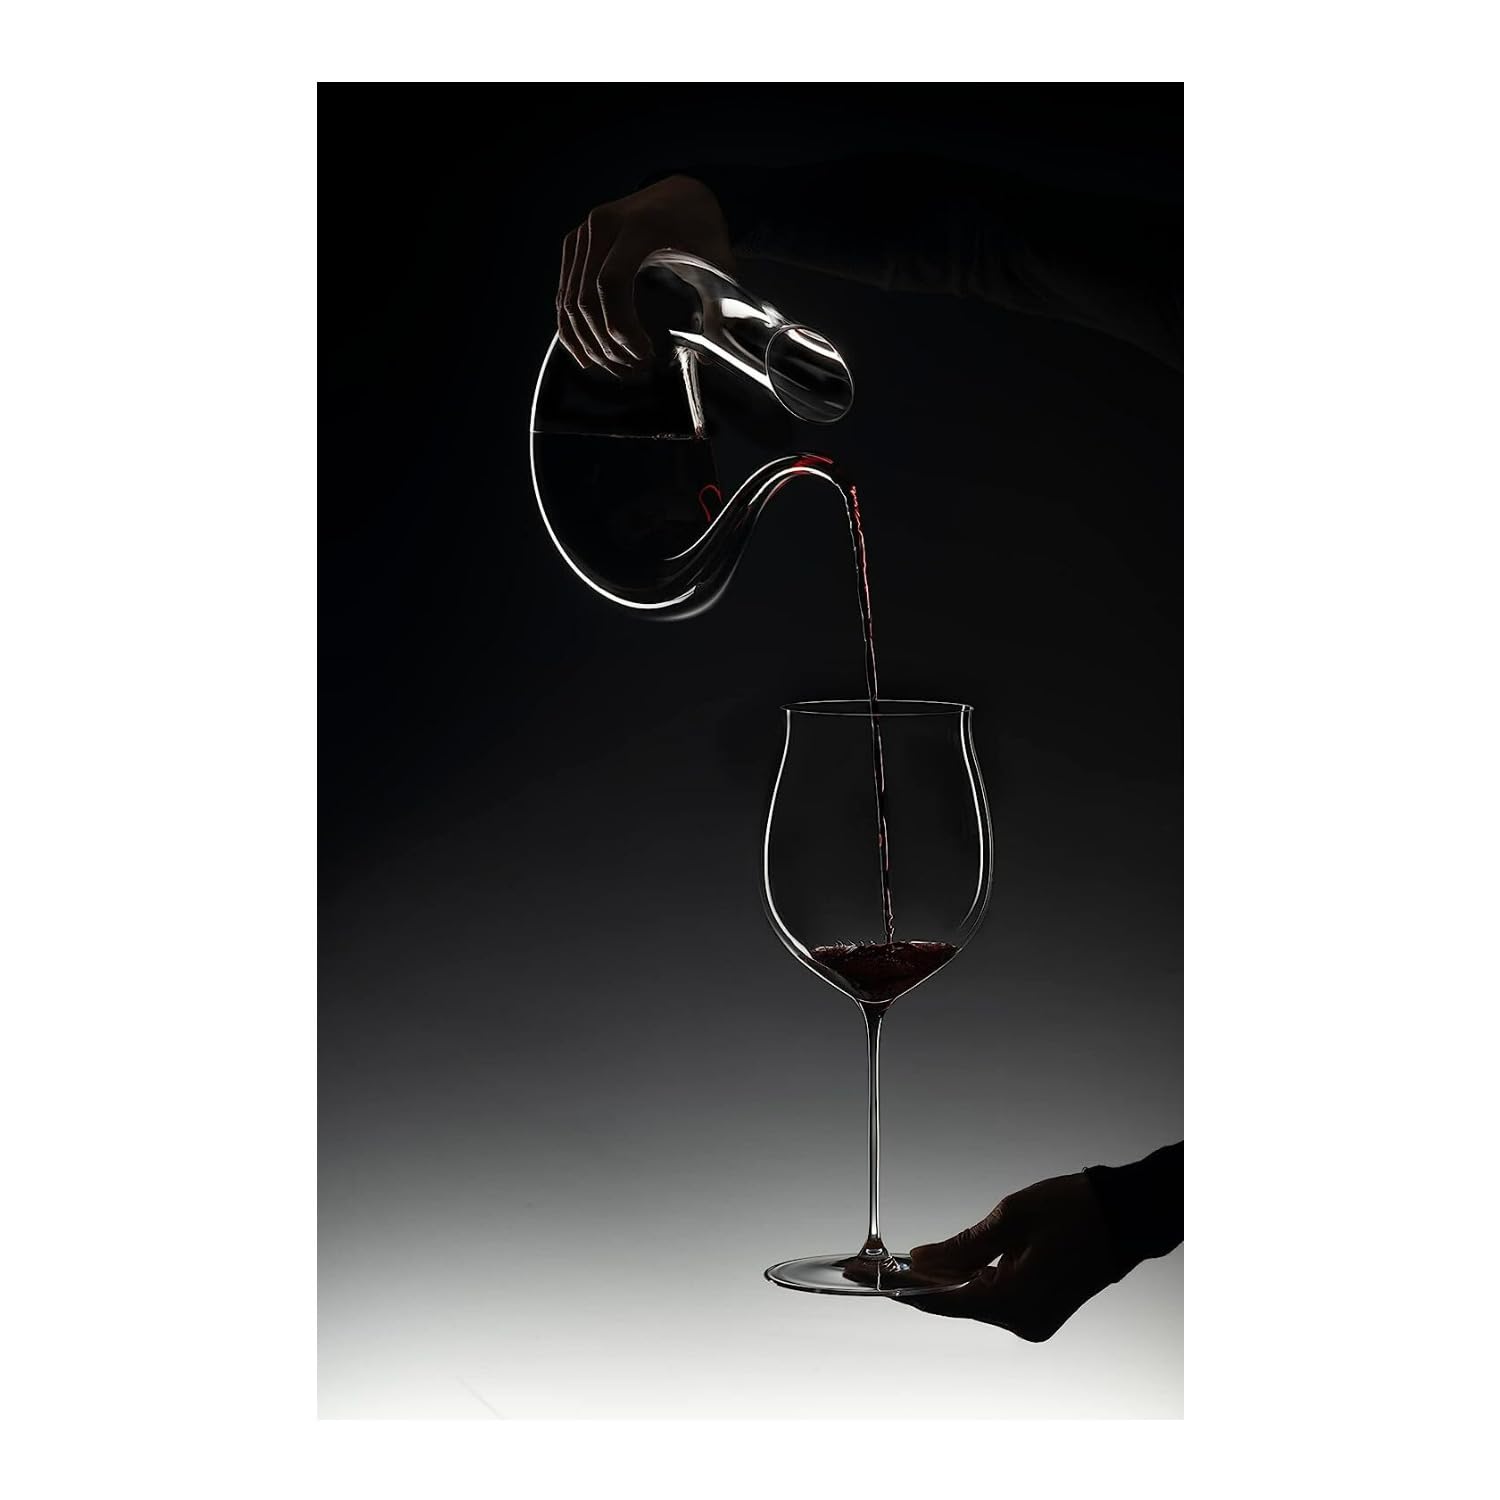 Riedel Supperleggero Burgundy Grand Cru 2 Glasses Bundle with Waring Pro Wine Aerator and Riedel Large Microfiber Polishing Cloth (4 Items)